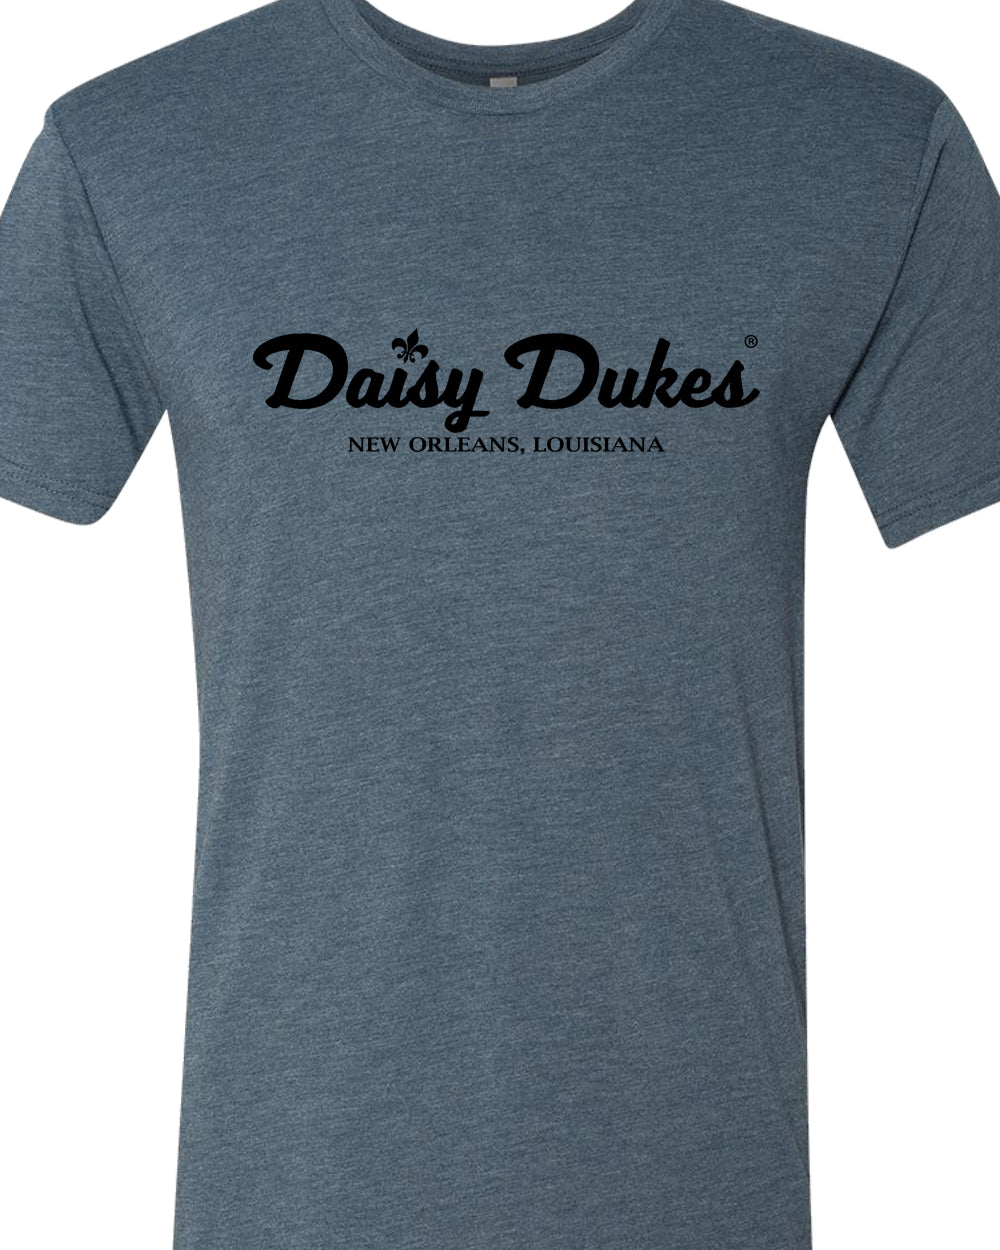 Daisy Dukes®Simple Script logo-Daisy Dukes Restaurant Apparel-Daisy Dukes Restaurant Store